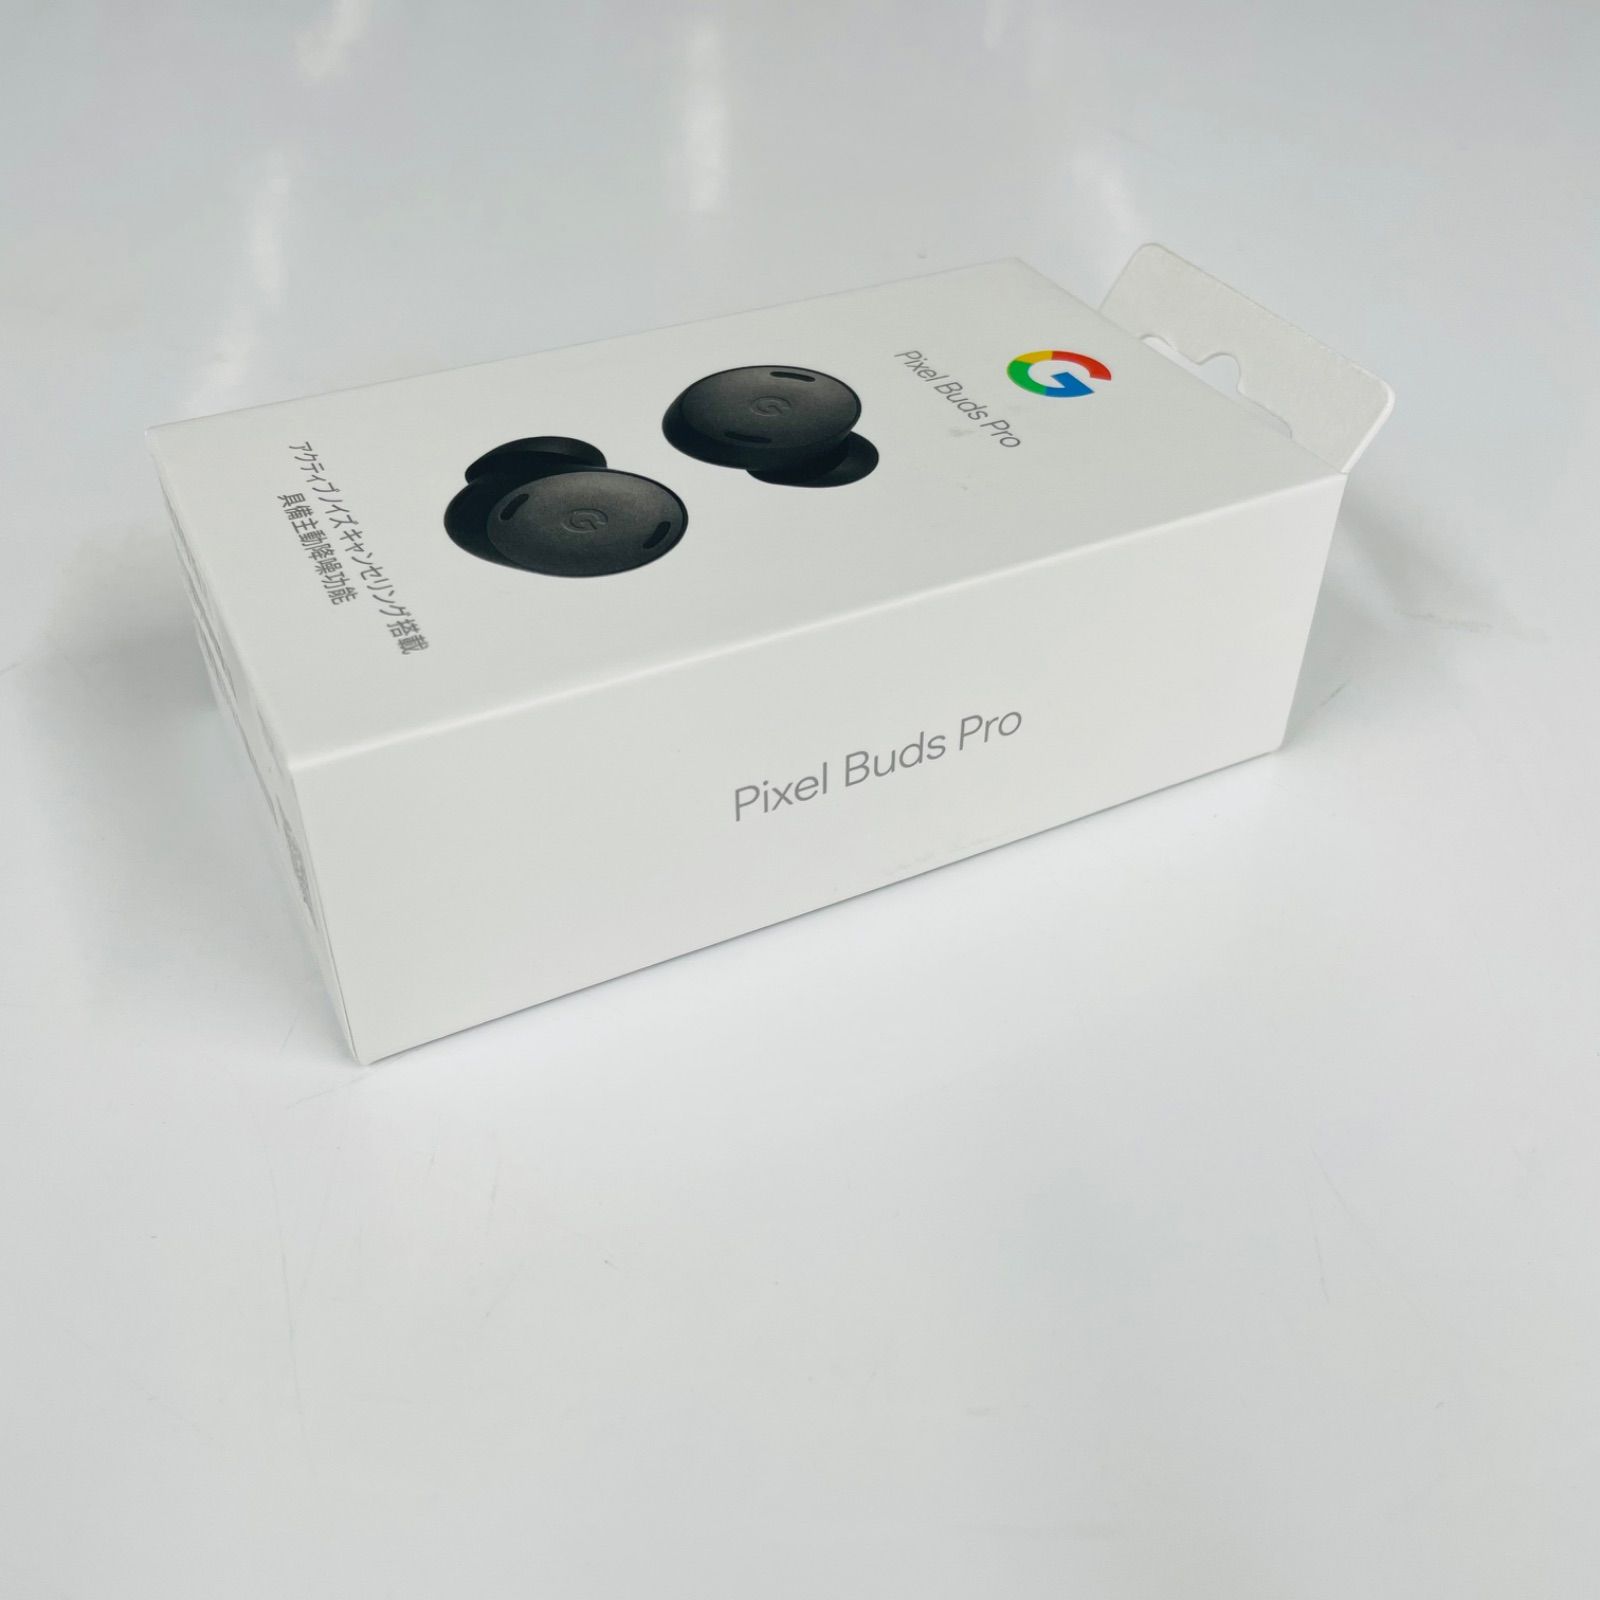 Google Pixel Buds Pro 新品・未開封 - メルカリ